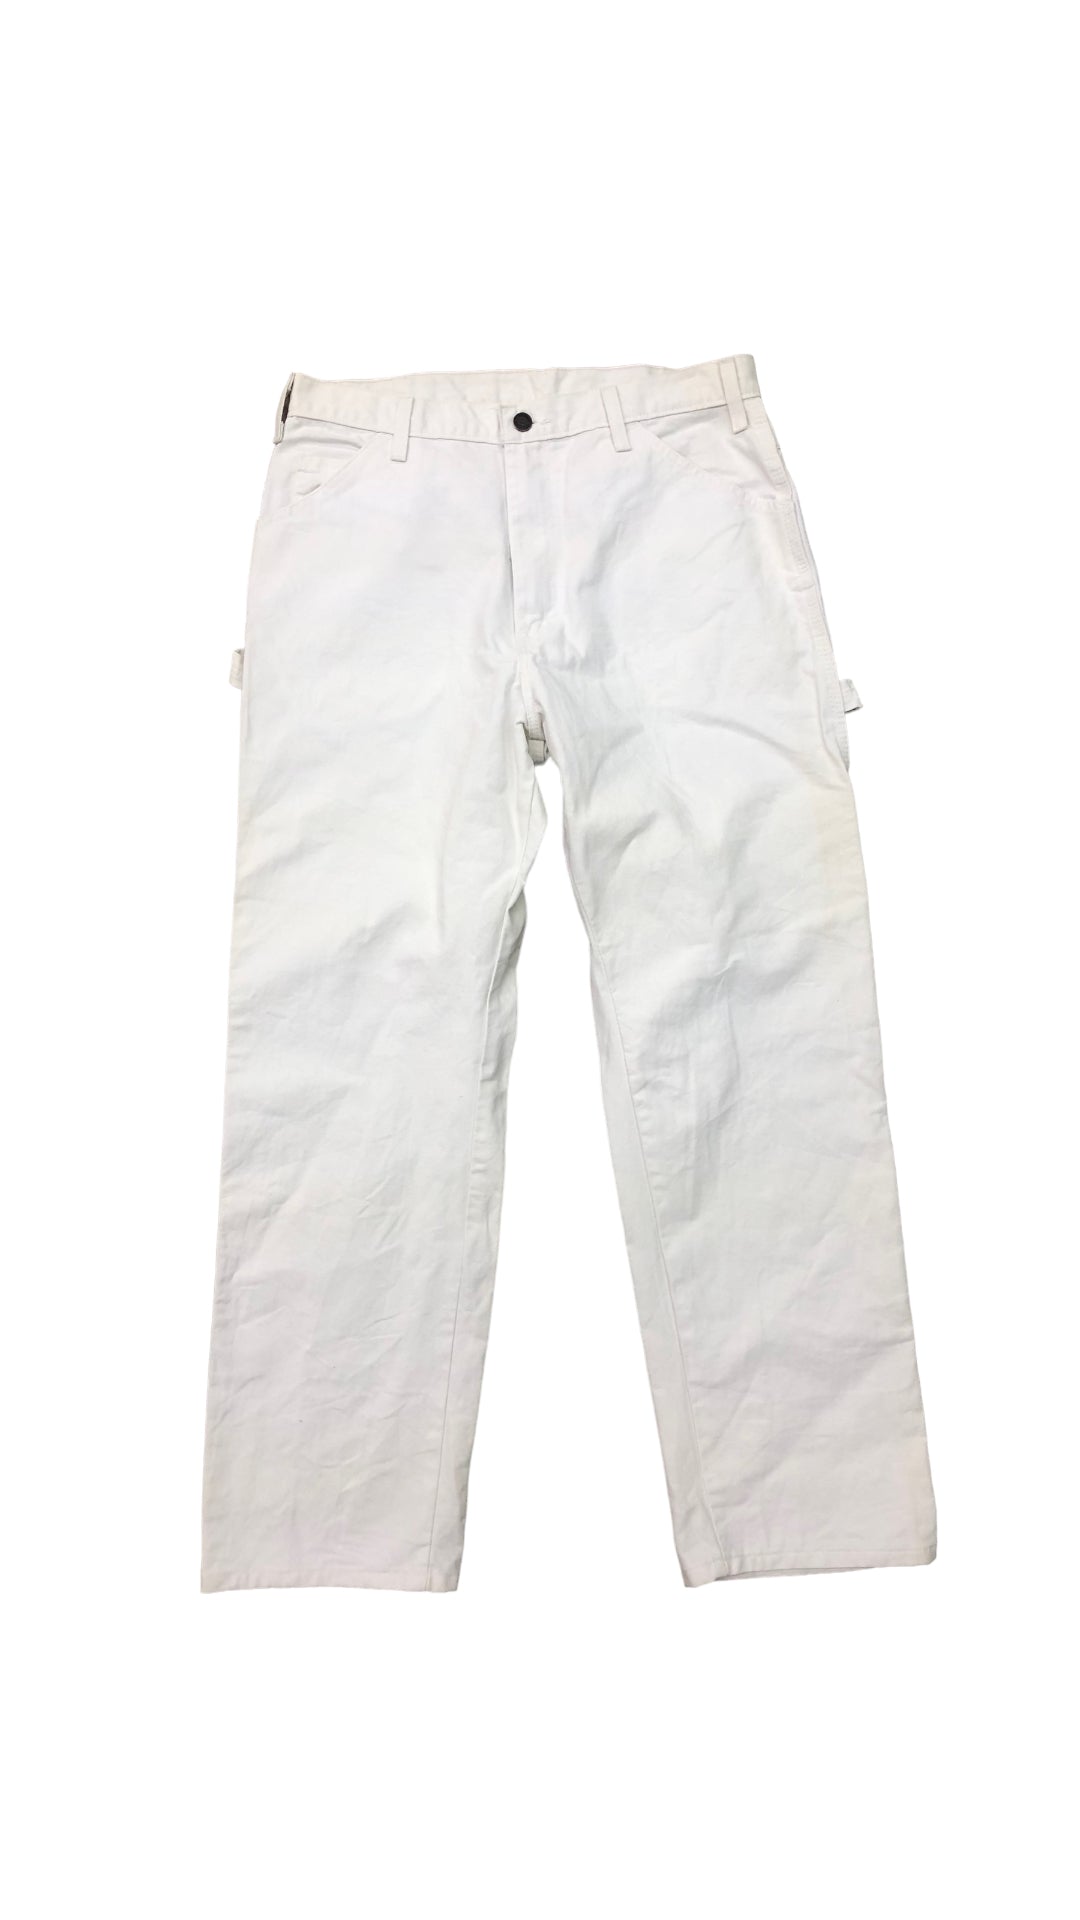 VTG White Dickies Jeans Sz 32x29